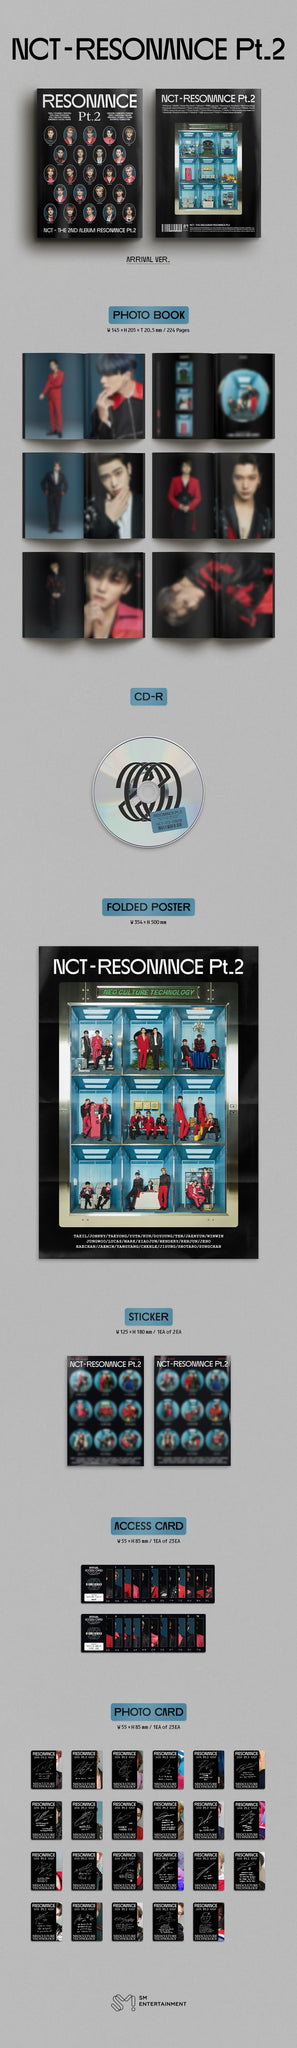 NCT 2020 - NCT RESONANCE Pt. 2